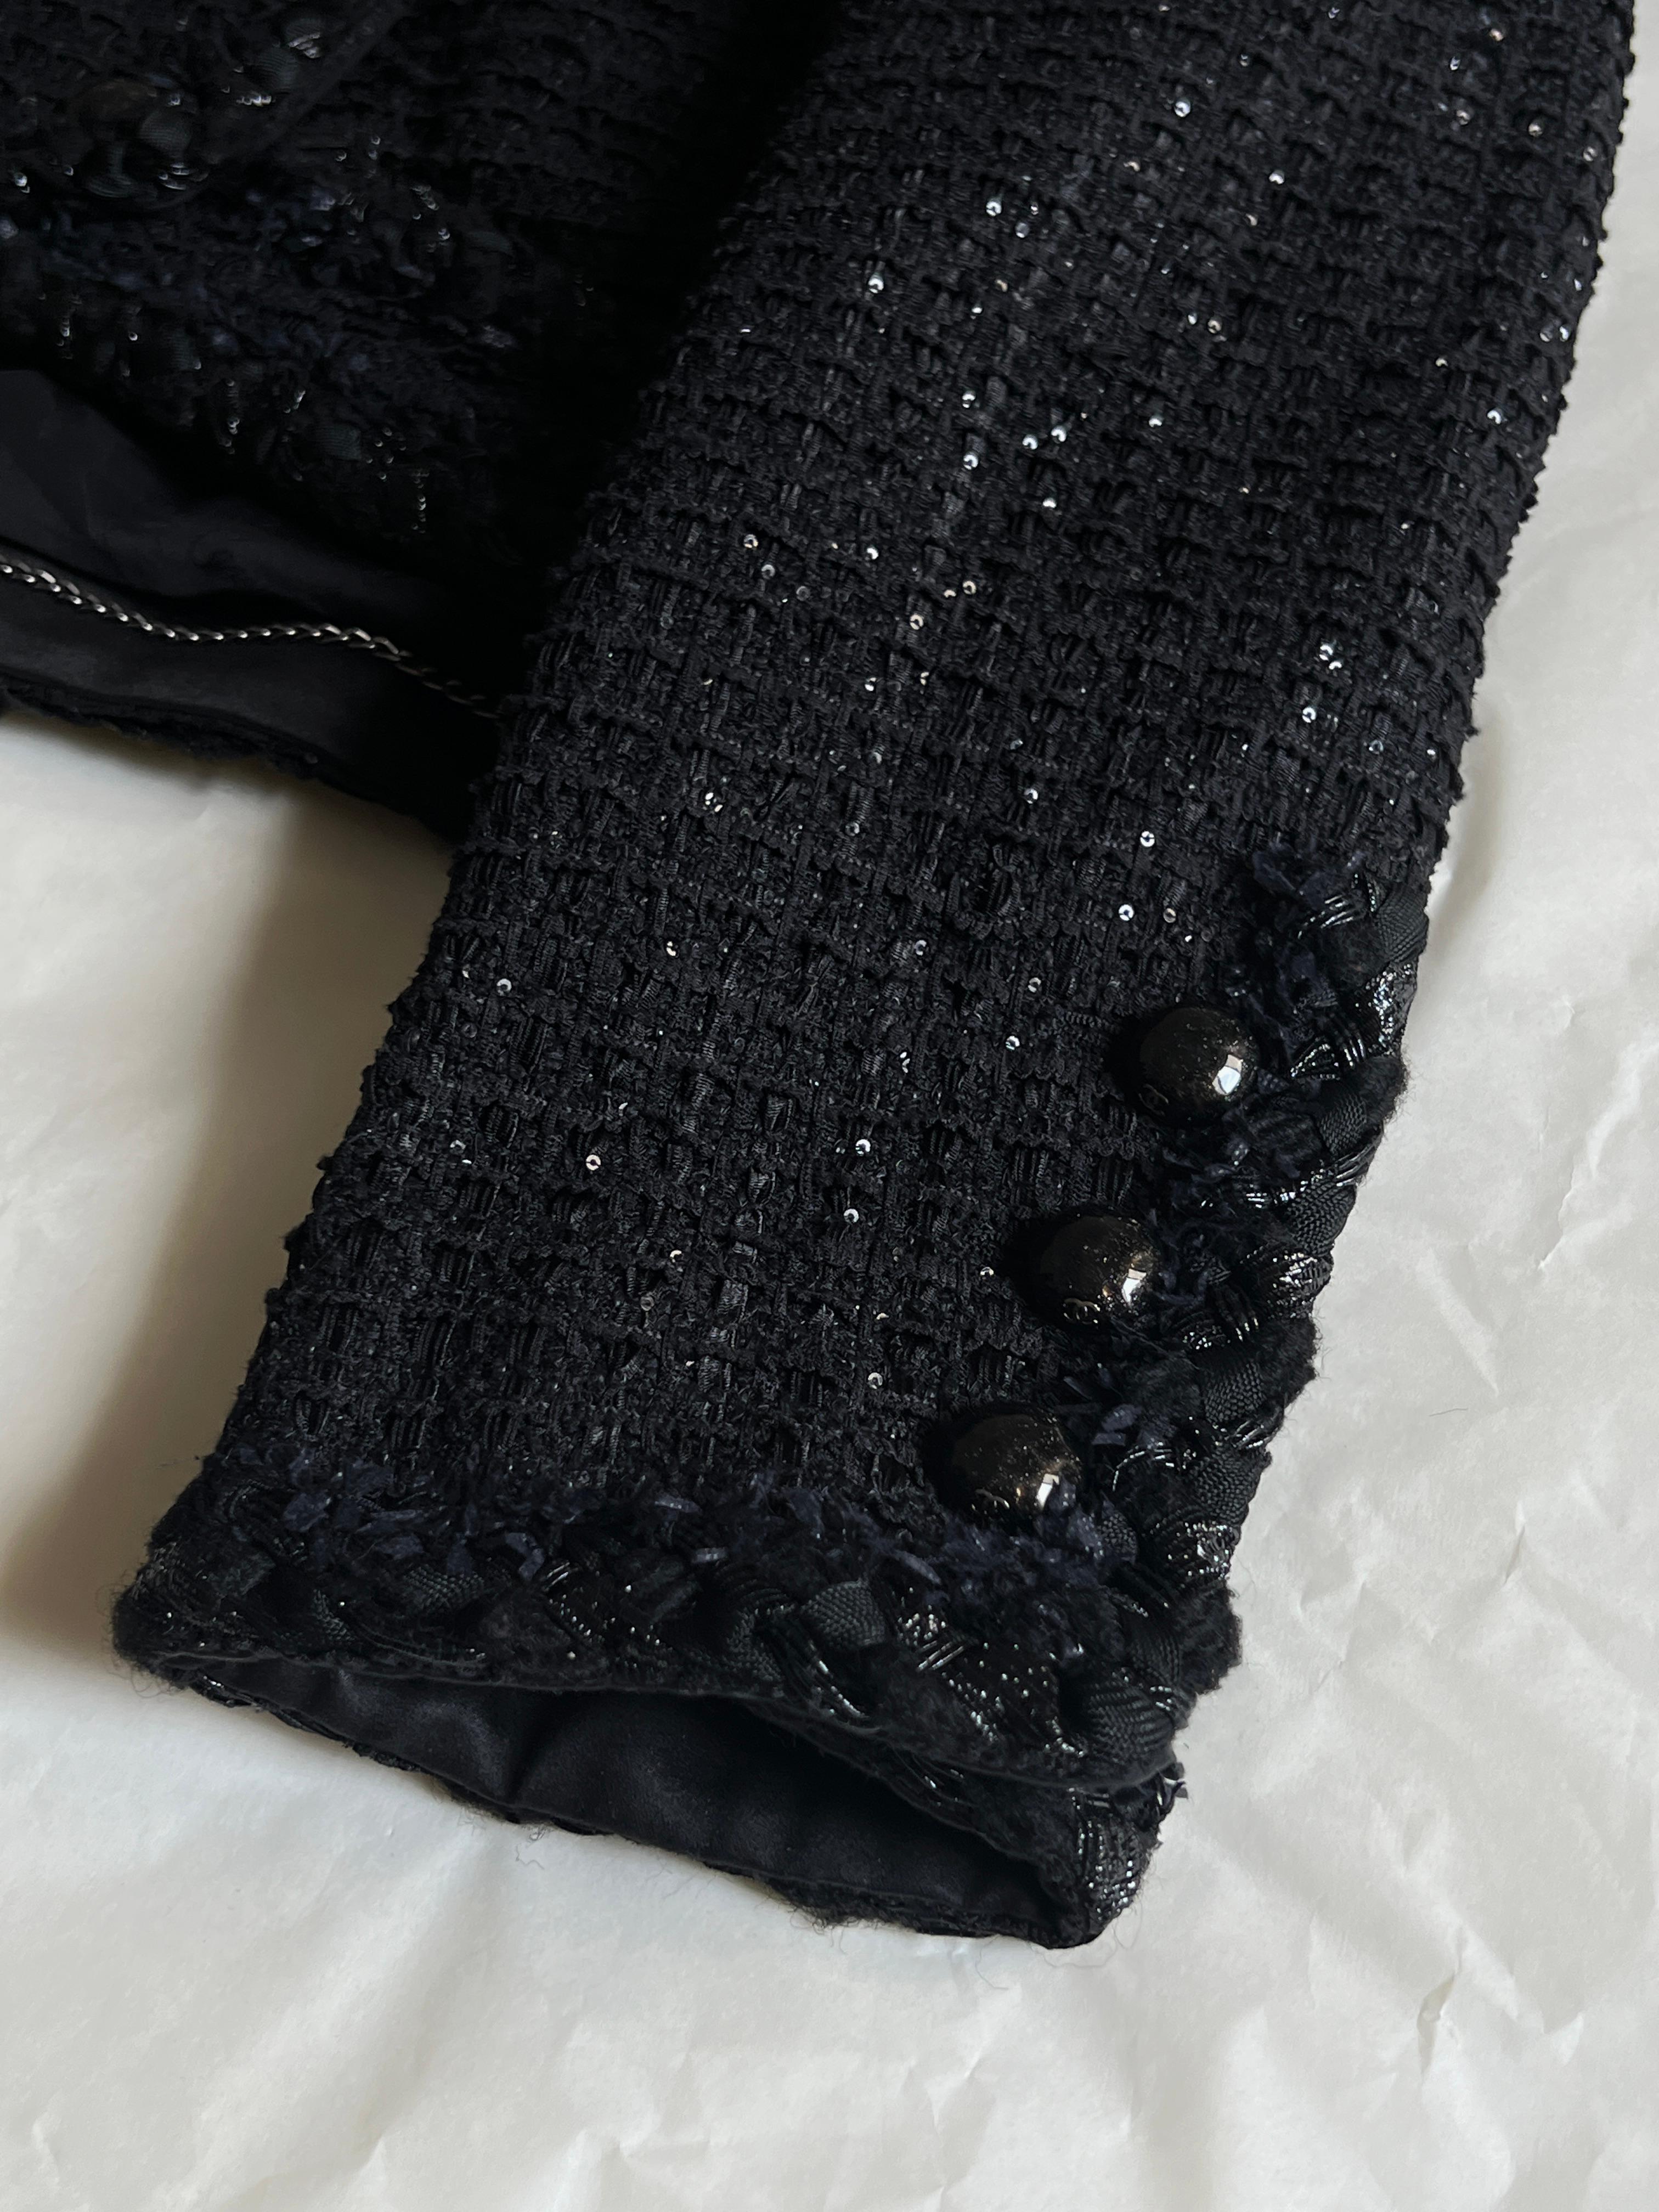 Chanel - Nicola Peltz - Veste en tweed noir à boutons CC en vente 11